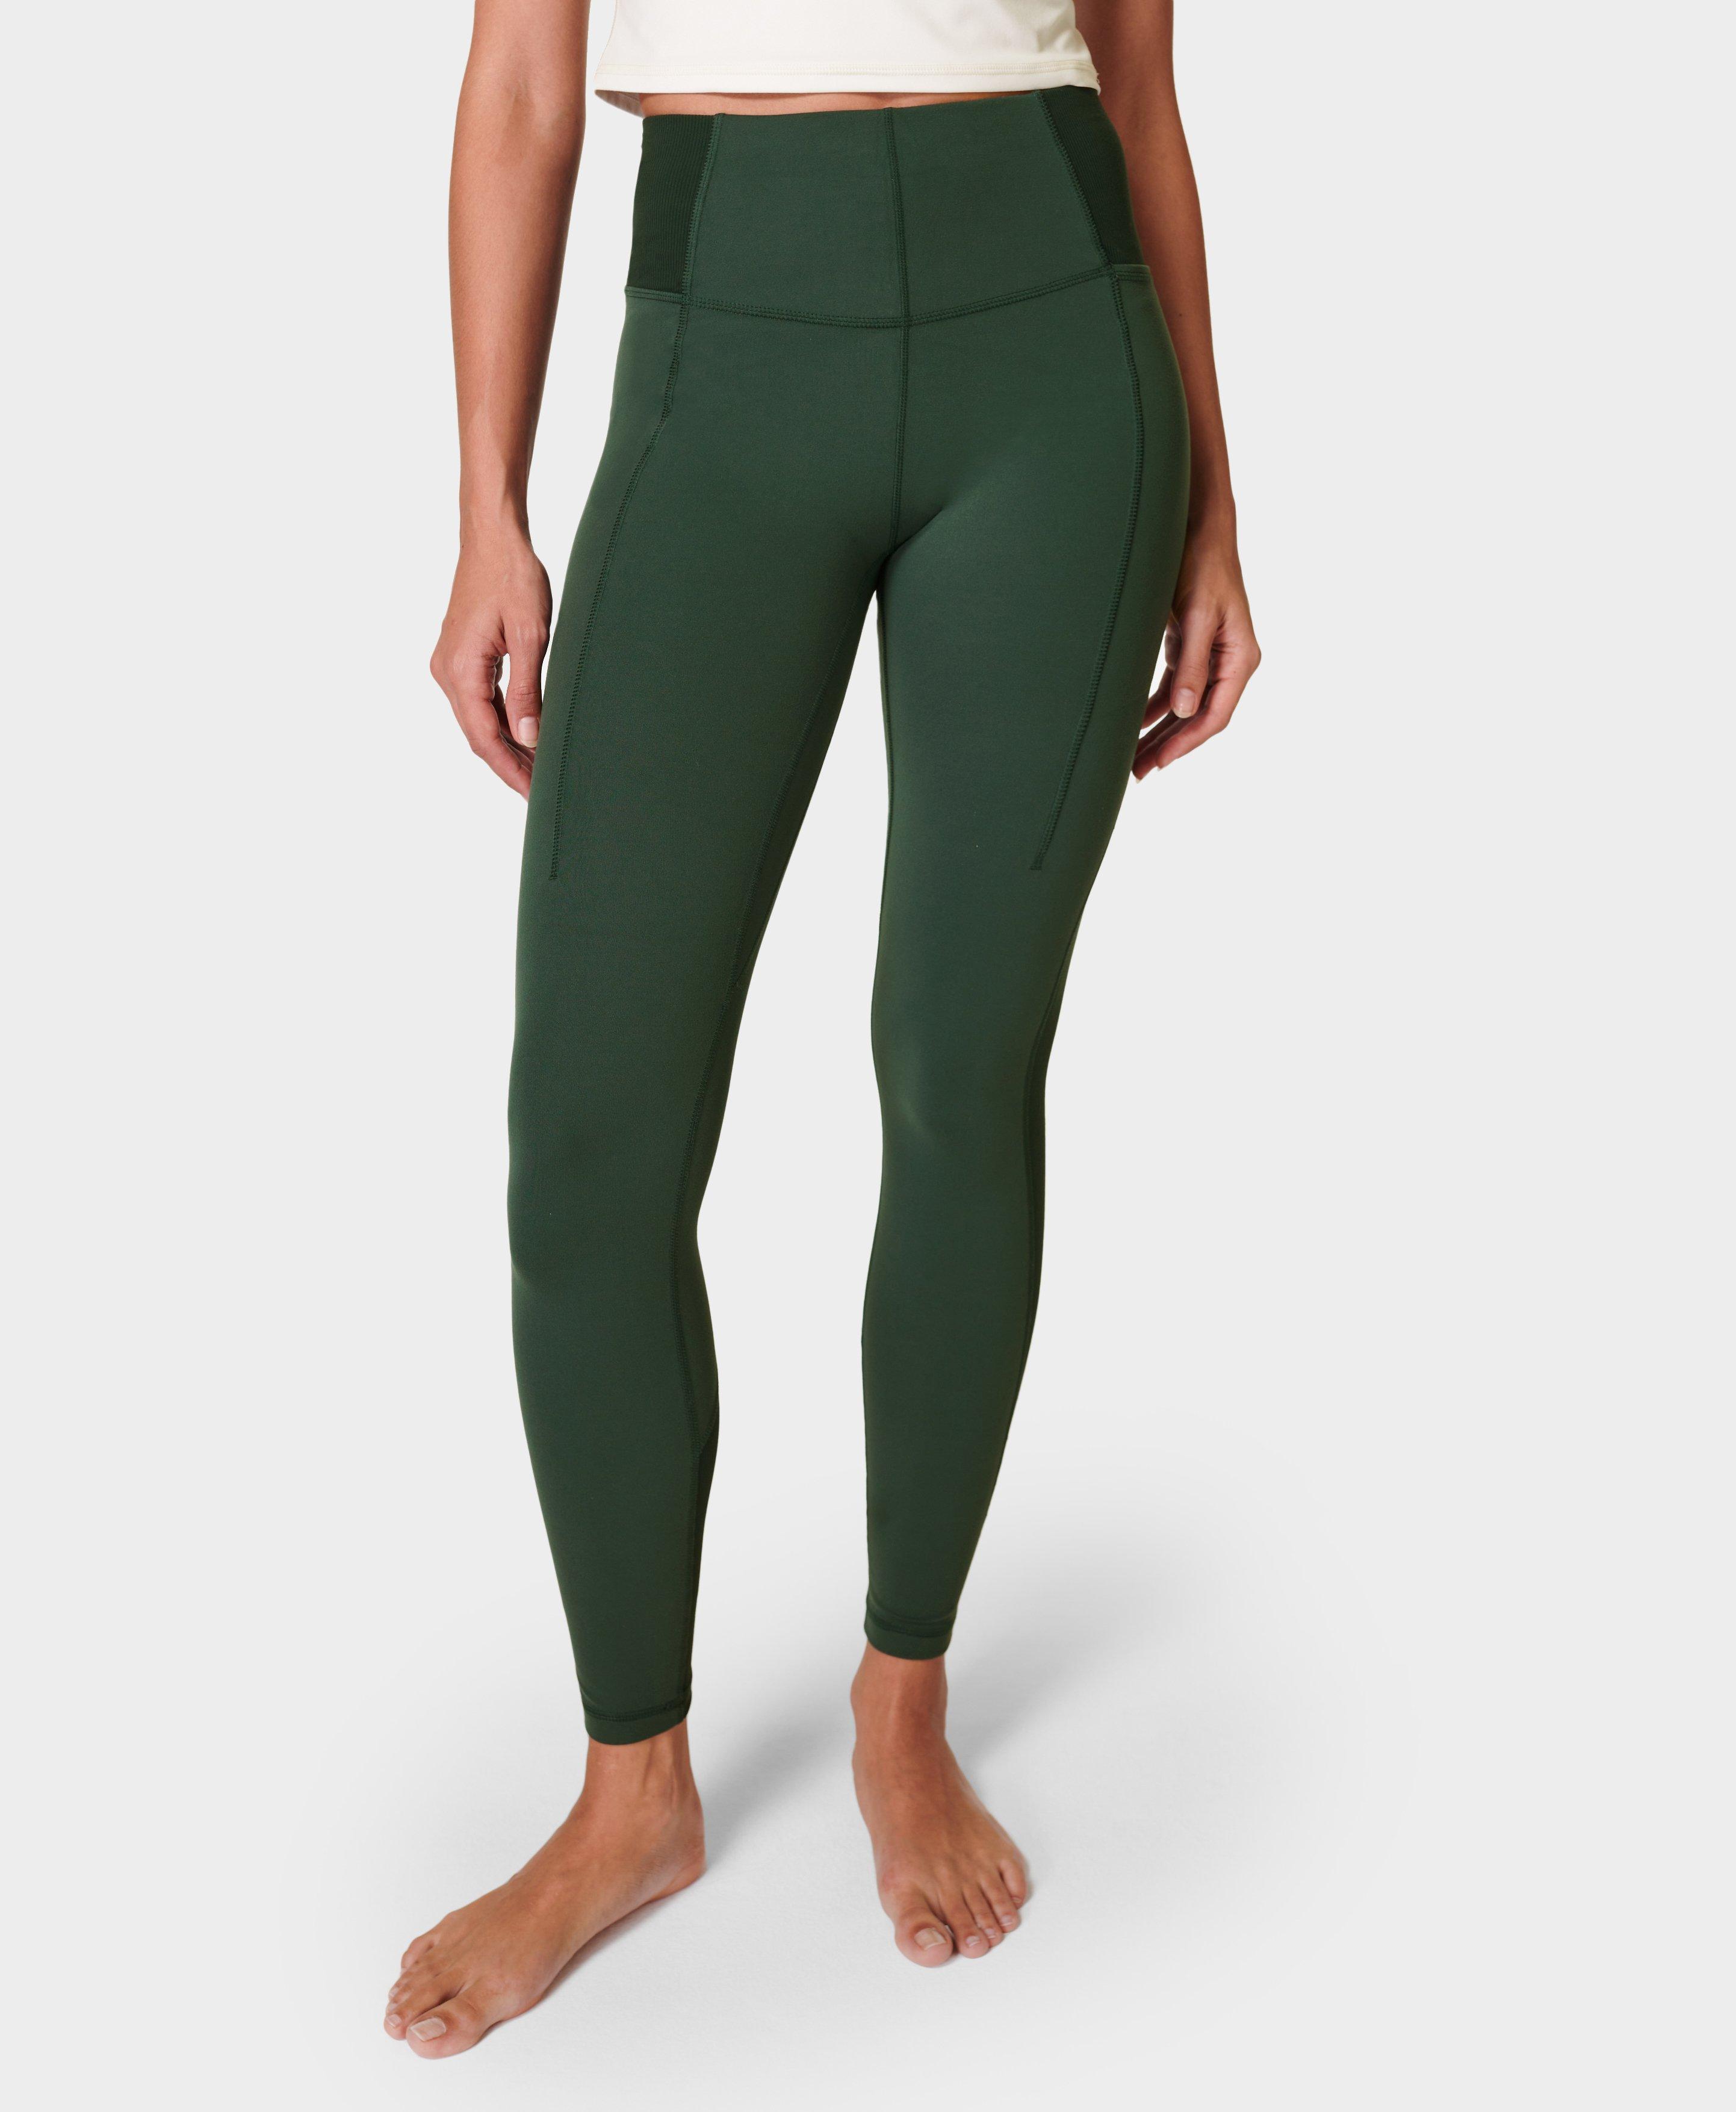 Lululemon Athletica Green Active Pants Size 20 (Plus) - 60% off